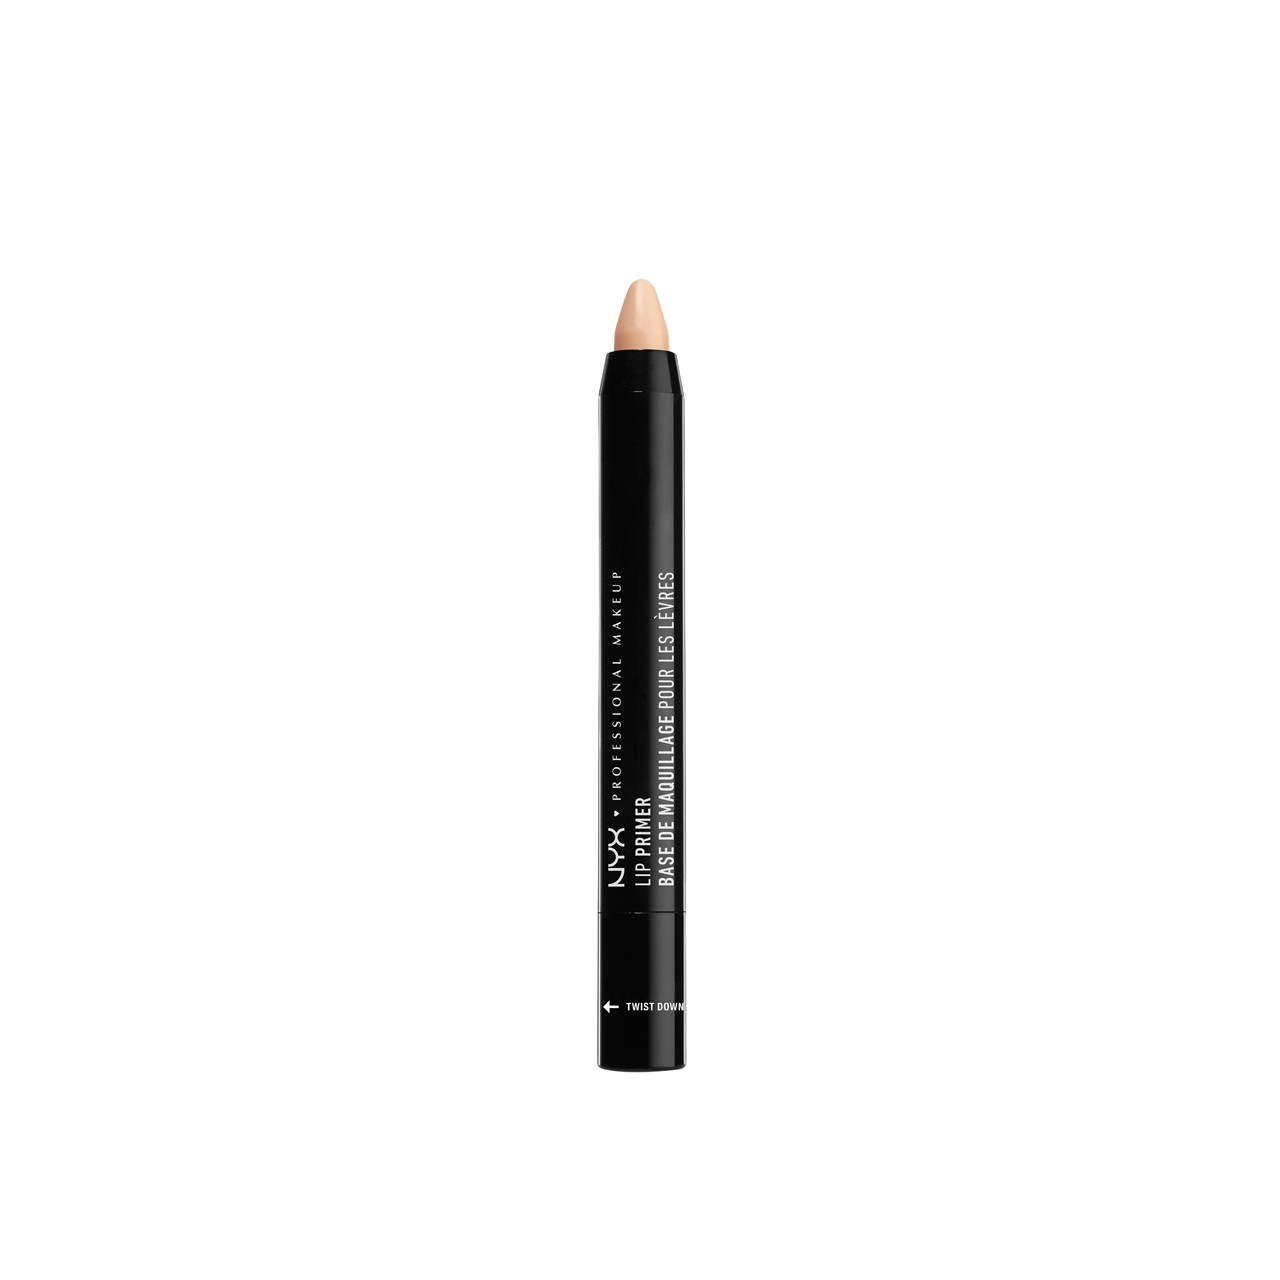 NYX Pro Makeup Lip Primer 01 Nude 3g (0.10oz)